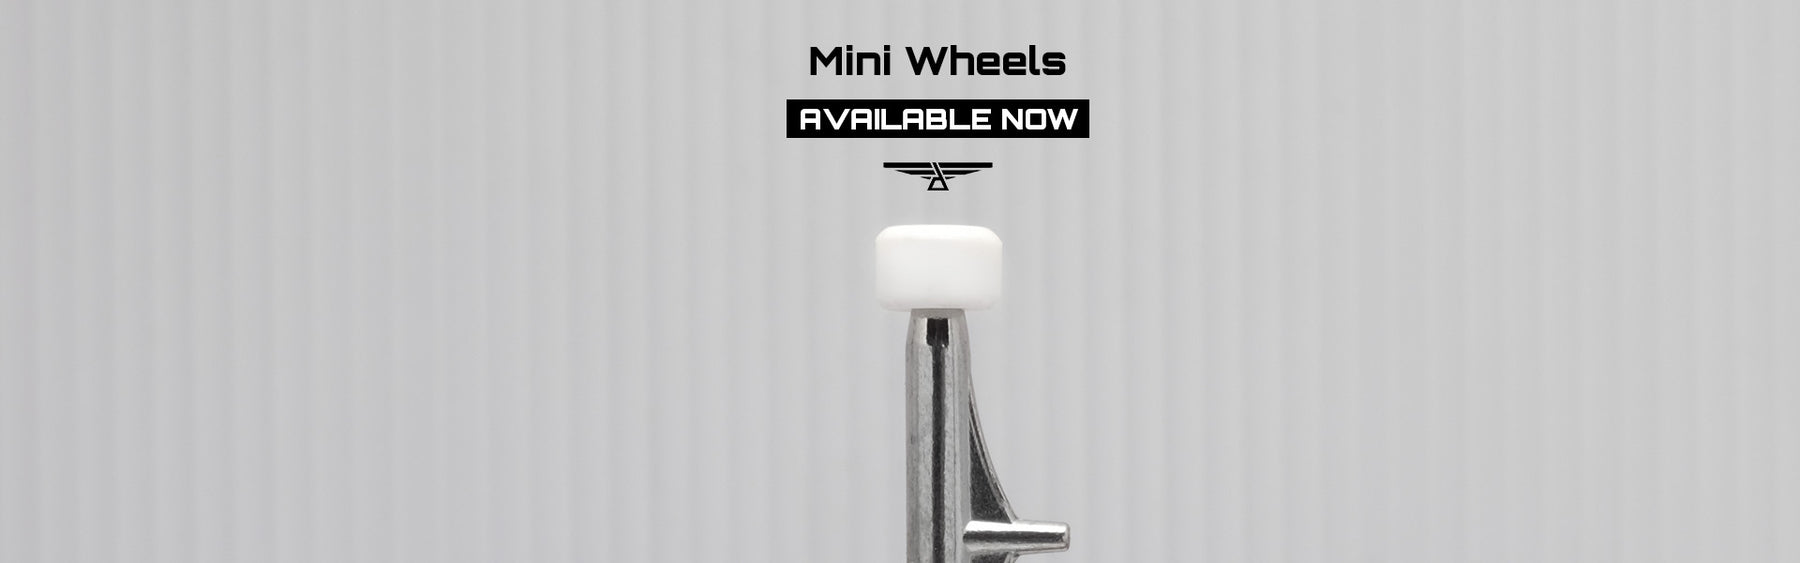 mini wheels photo launch desktop